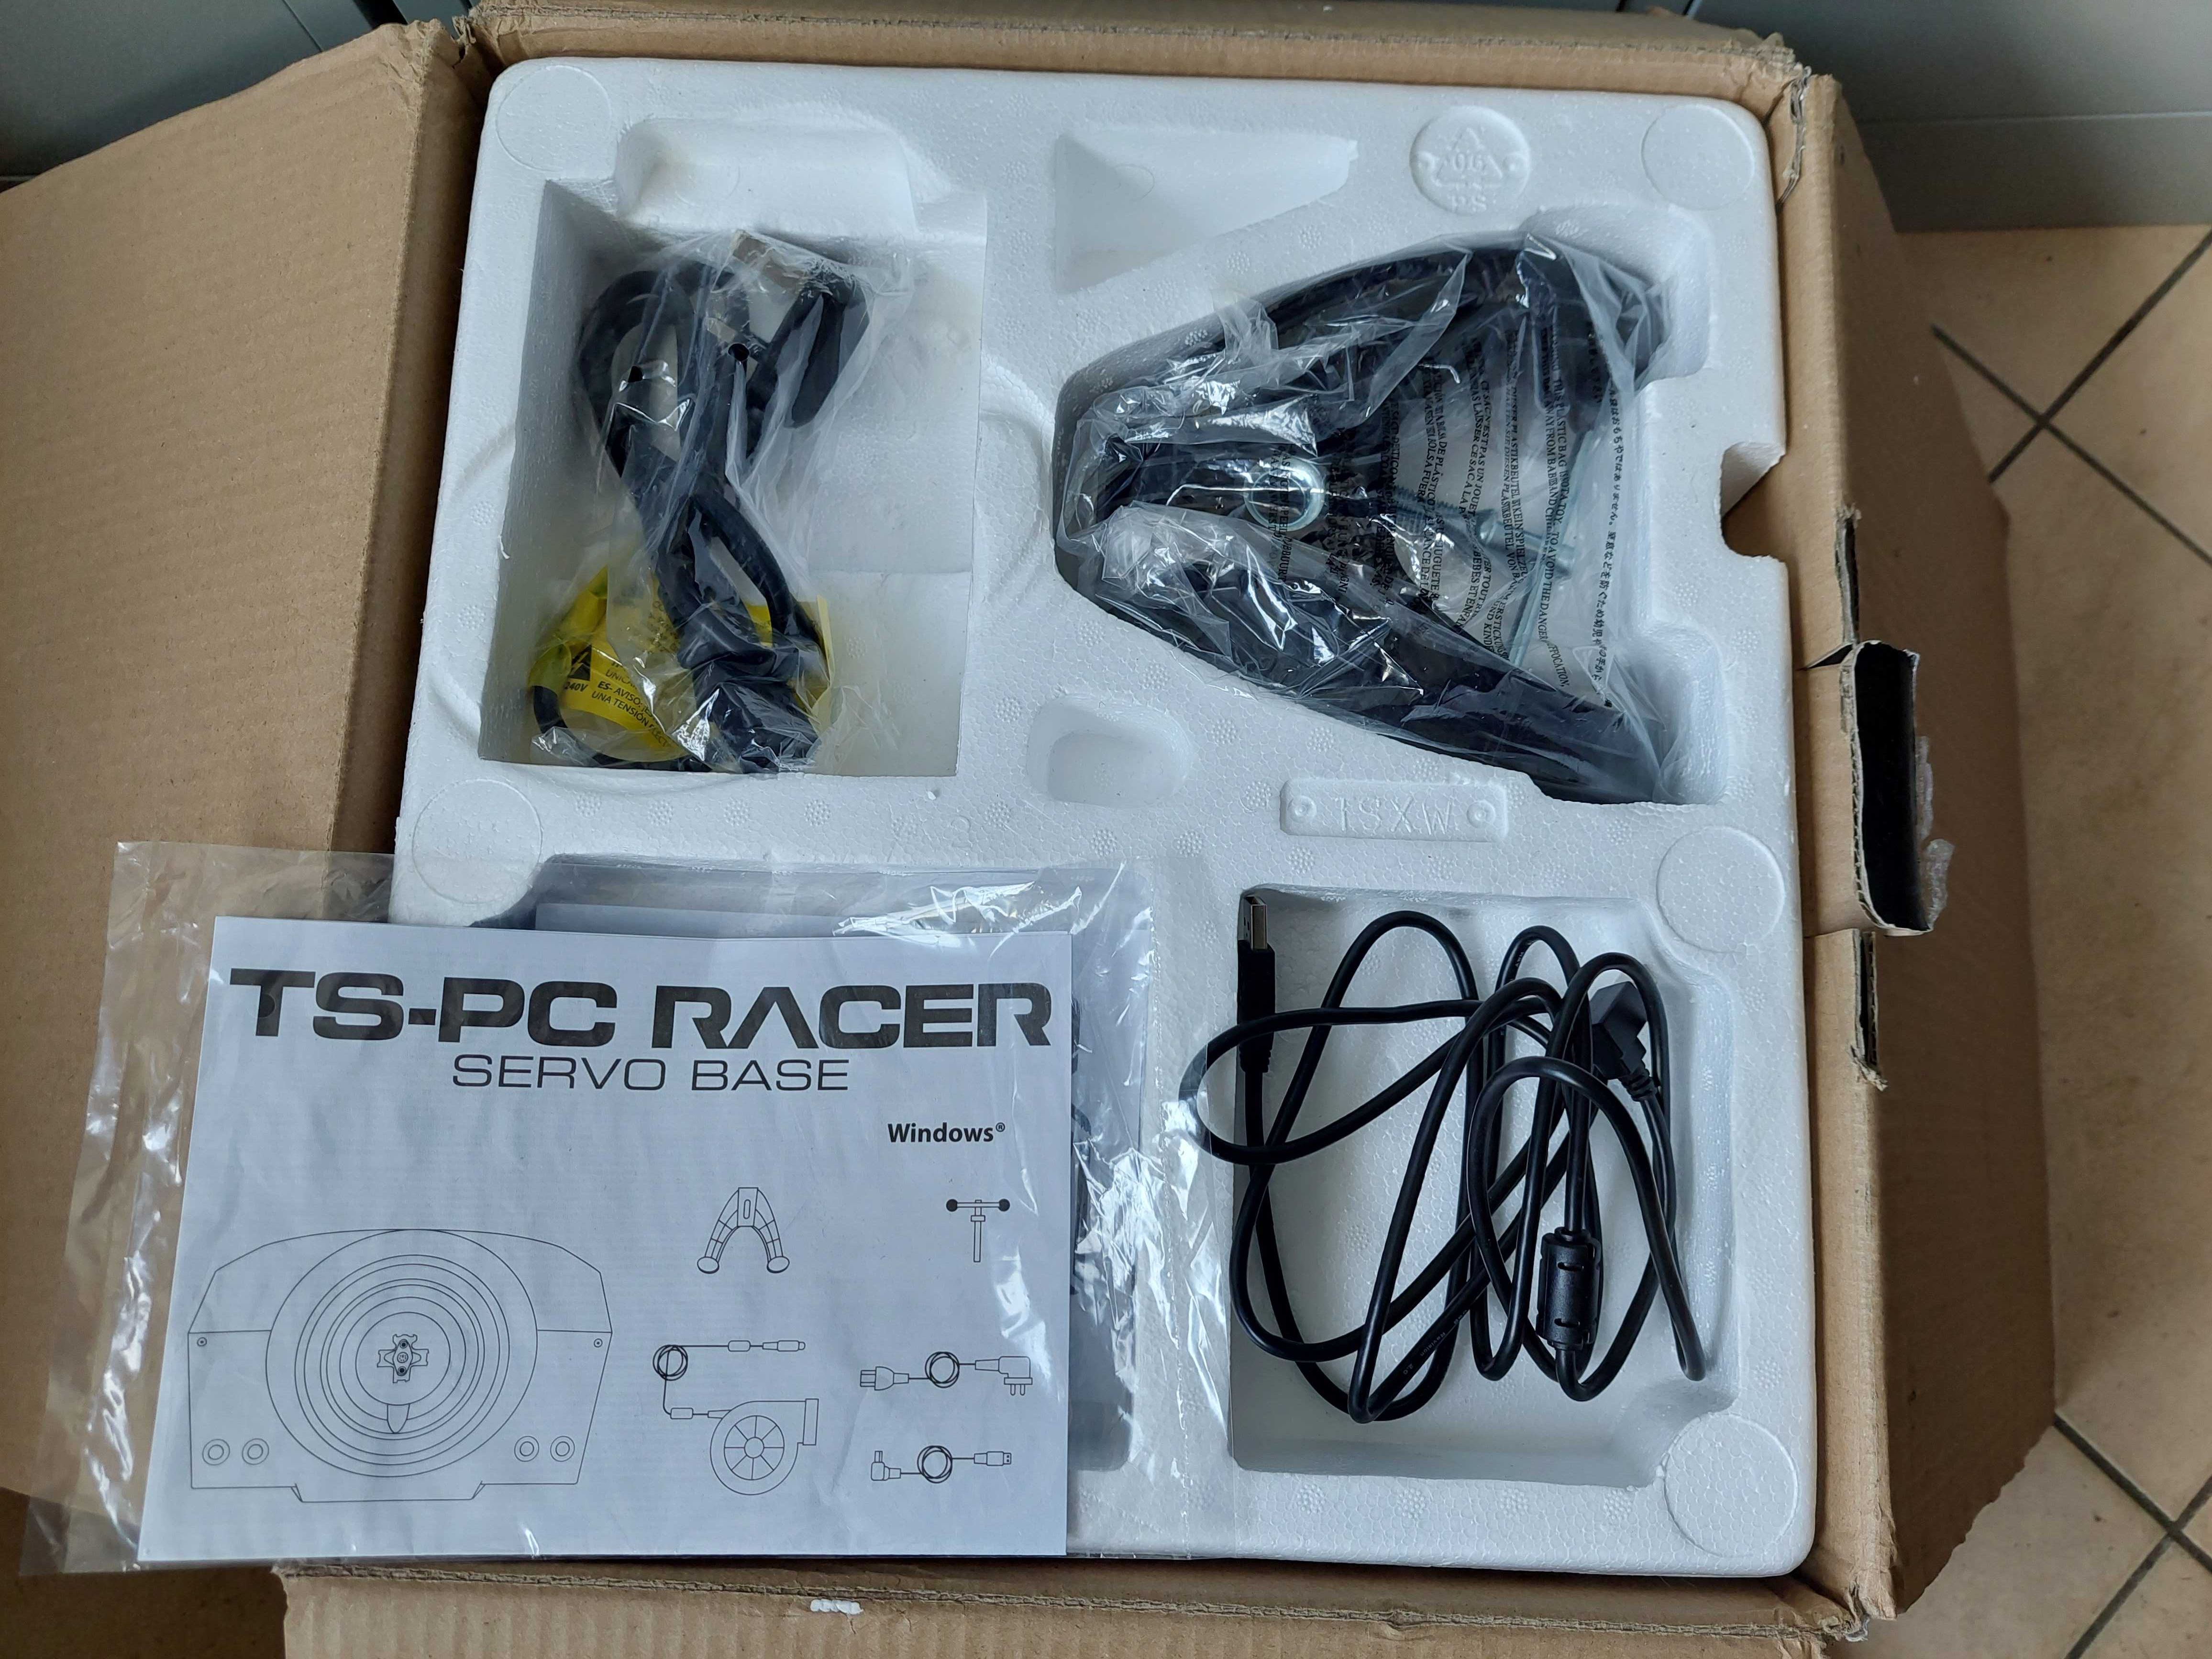 Baza kierownica Thrustmaster TS-PC Racer servo base jak nowa